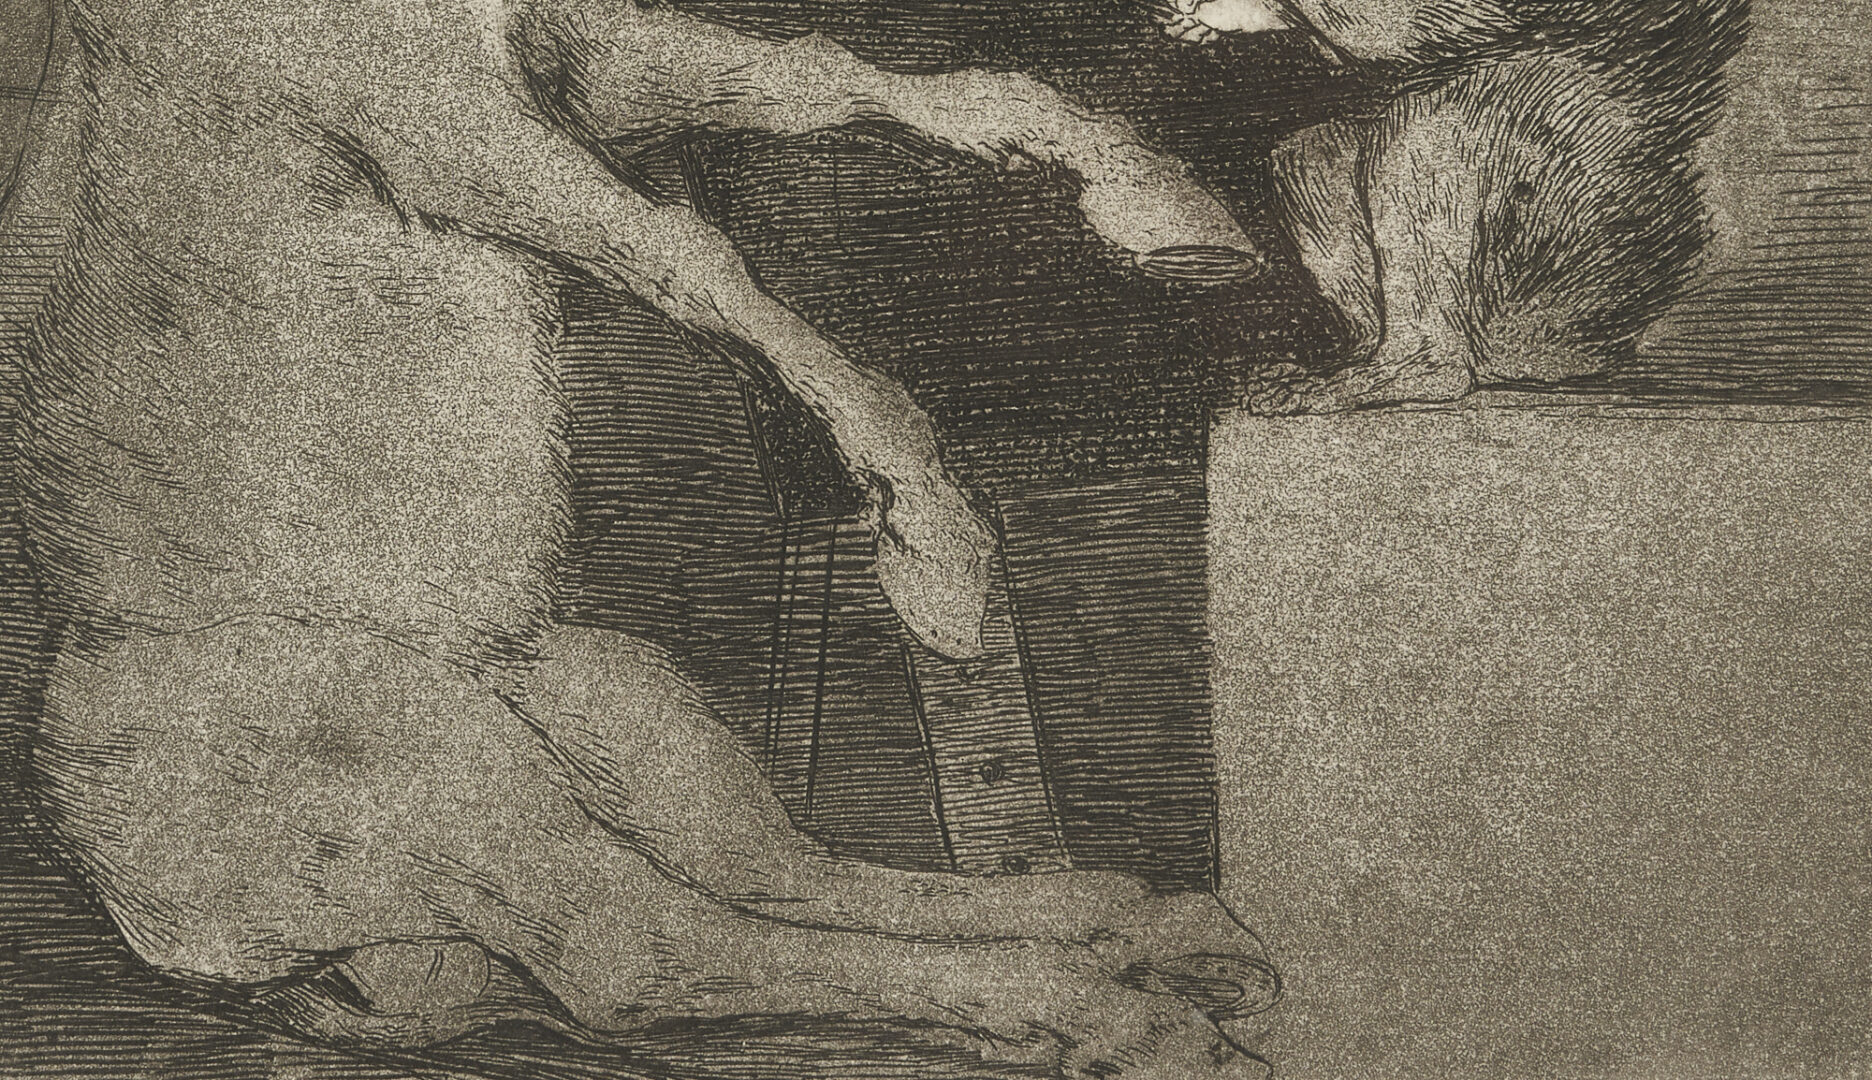 Lot 106: Four Goya Etchings from Los Caprichos, incl. Ni Mas Ni Menos & Brabisimo